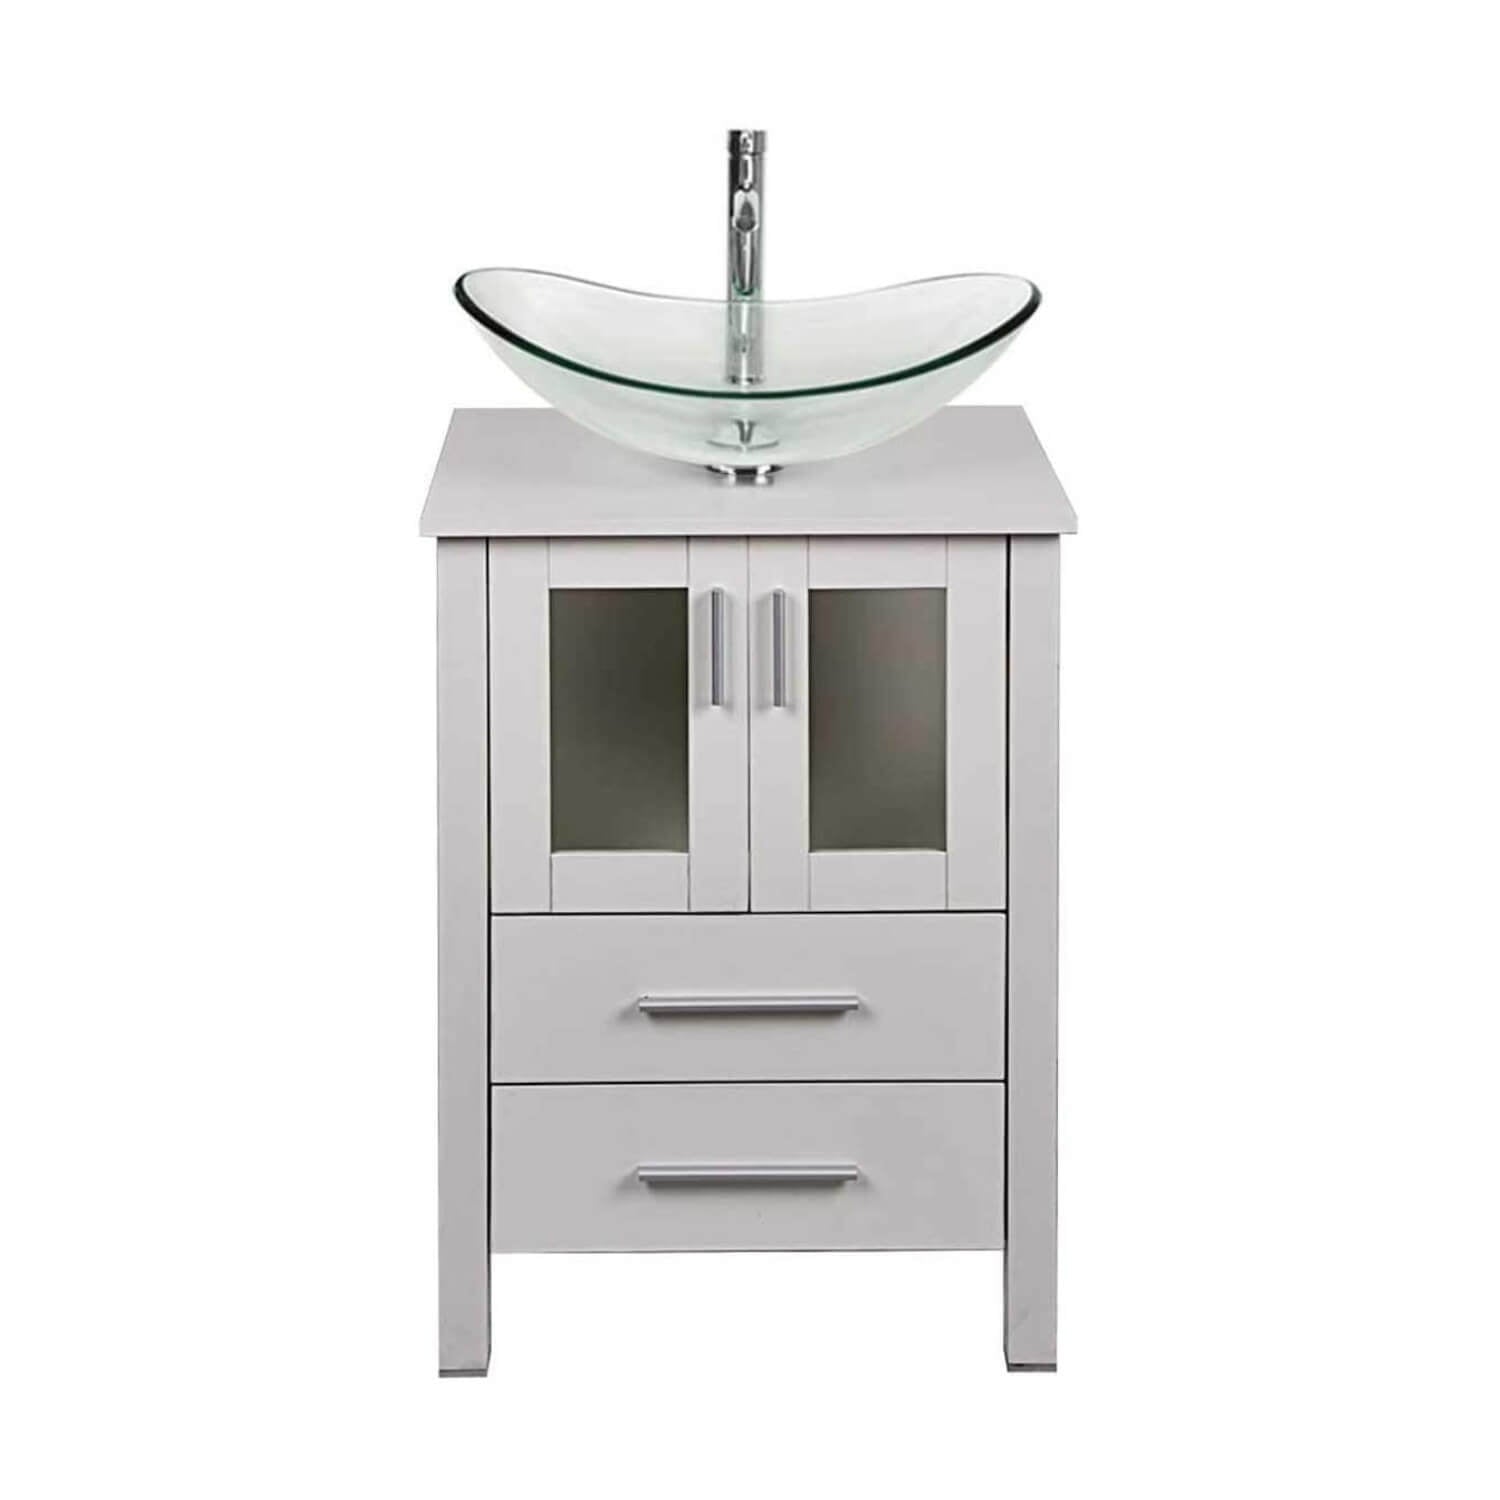 Oval Glass Vessel Sink BG007 with white bathroom vanity